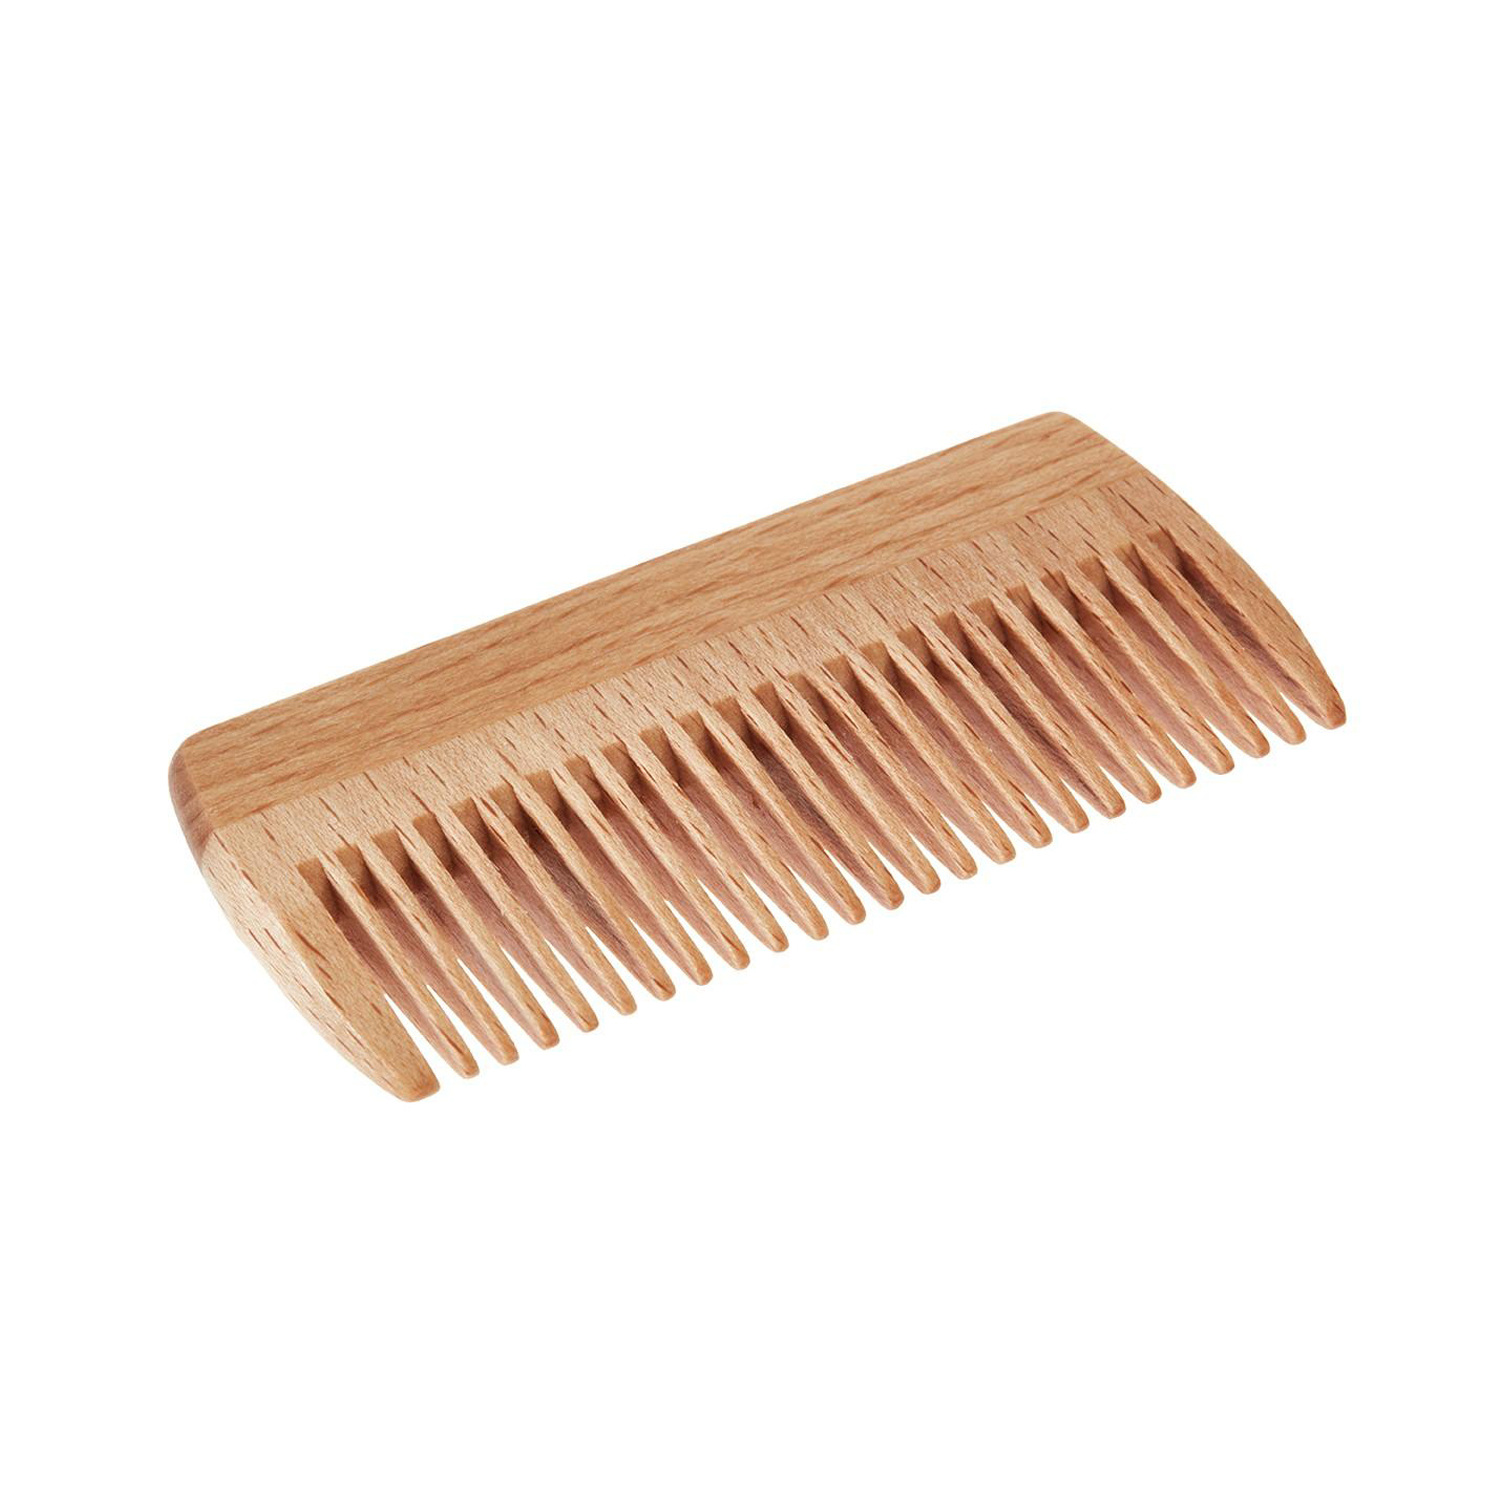 keller-624-22-00-beard-comb-wooden